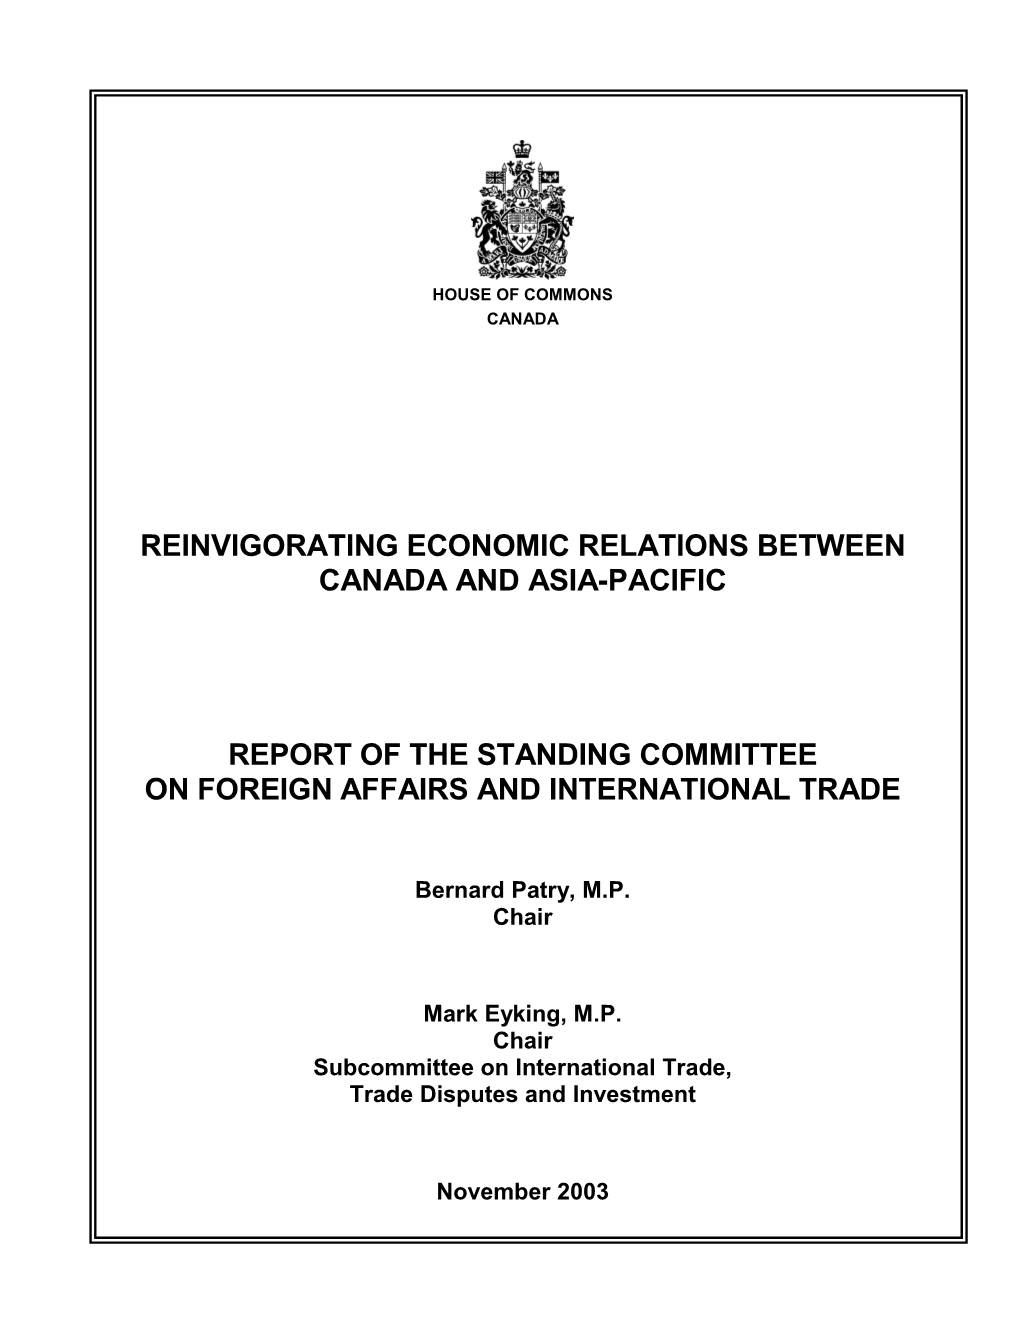 Reinvigorating Economic Relations Between Canada and Asia-Pacific